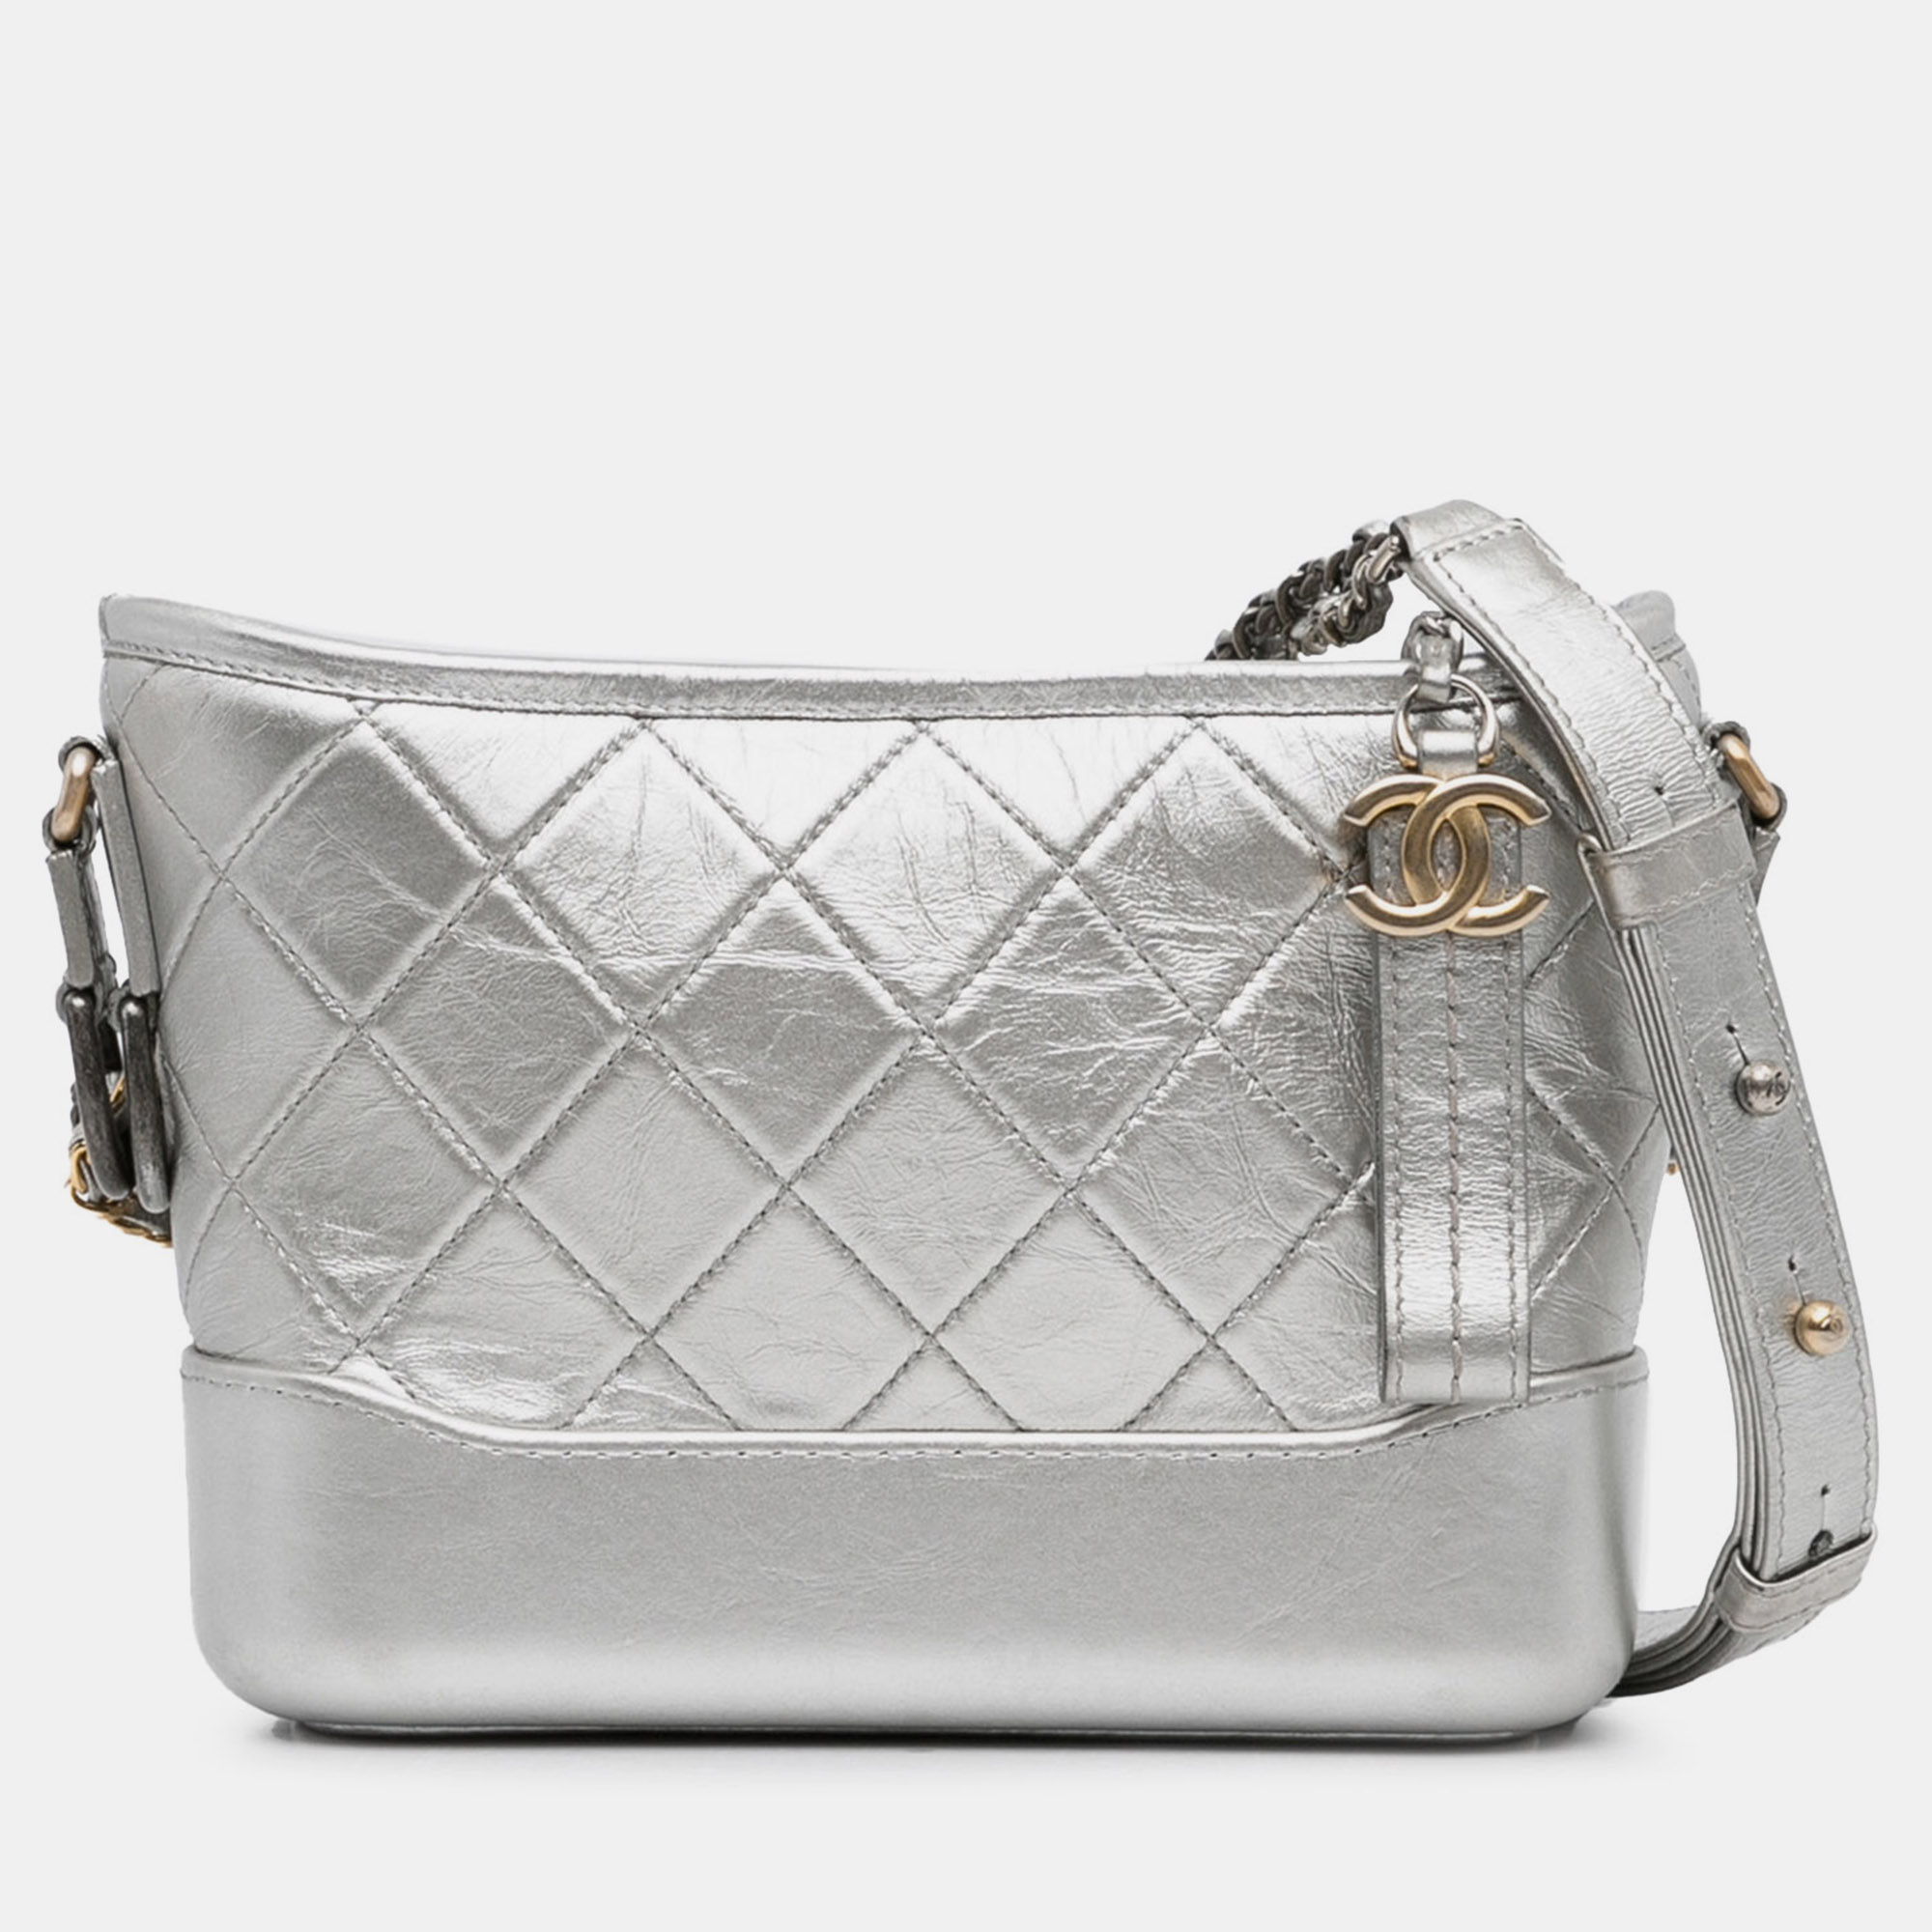 Chanel small metallic gabrielle crossbody bag